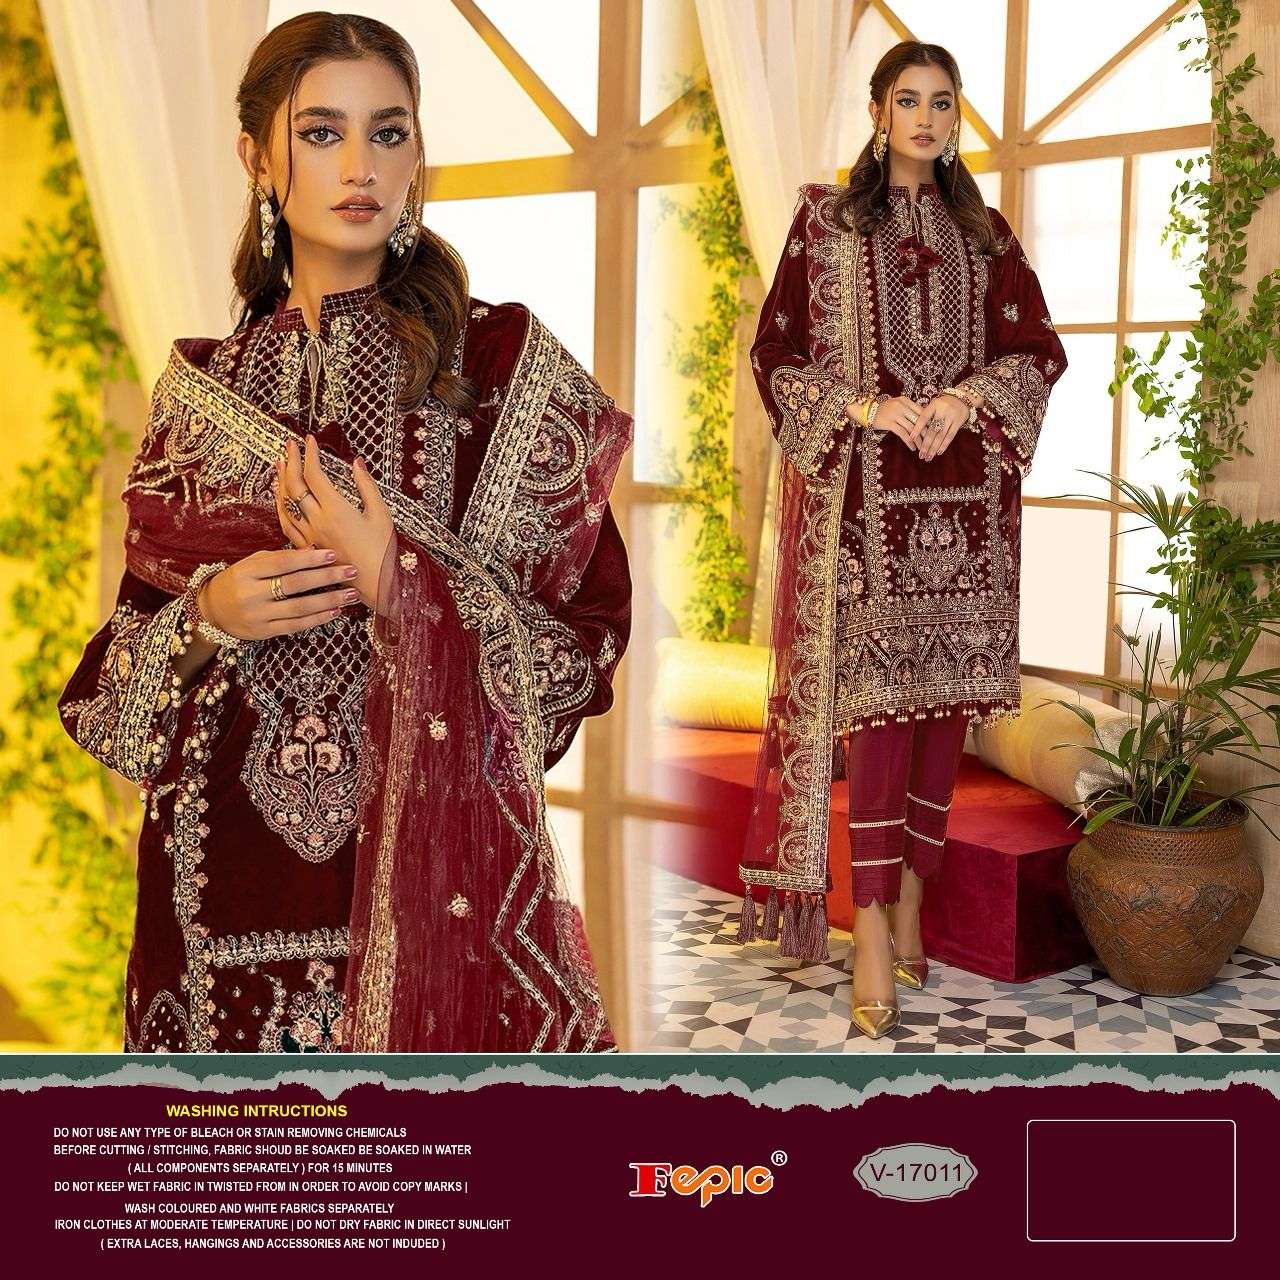 fepic 17011 colour series latest designer pakistani salwar kameez at wholesale price surat gujarat